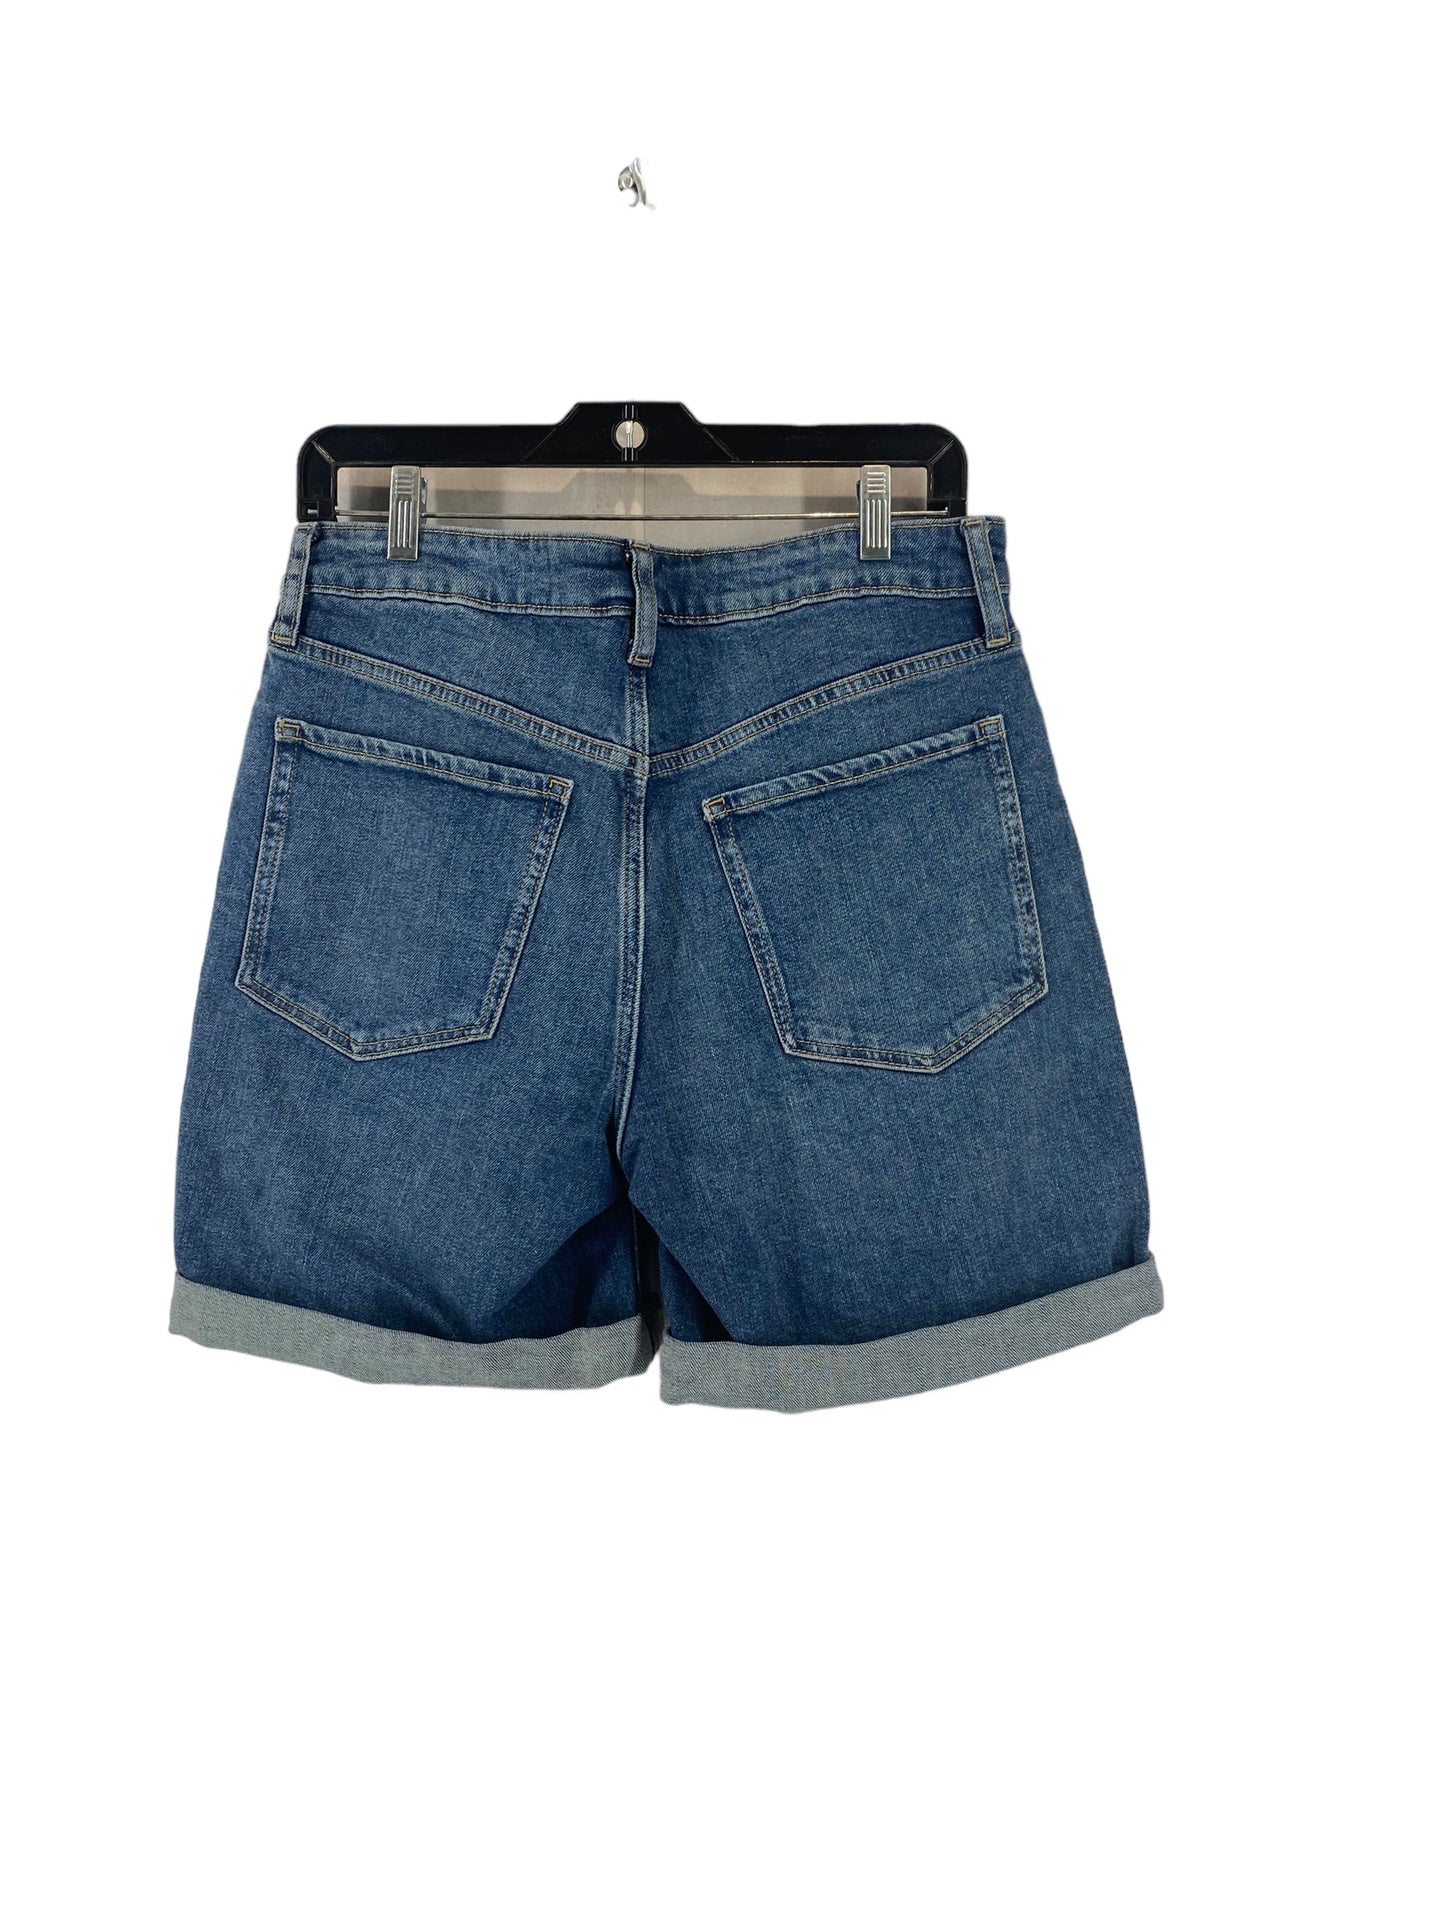 Blue Denim Shorts Old Navy, Size 8